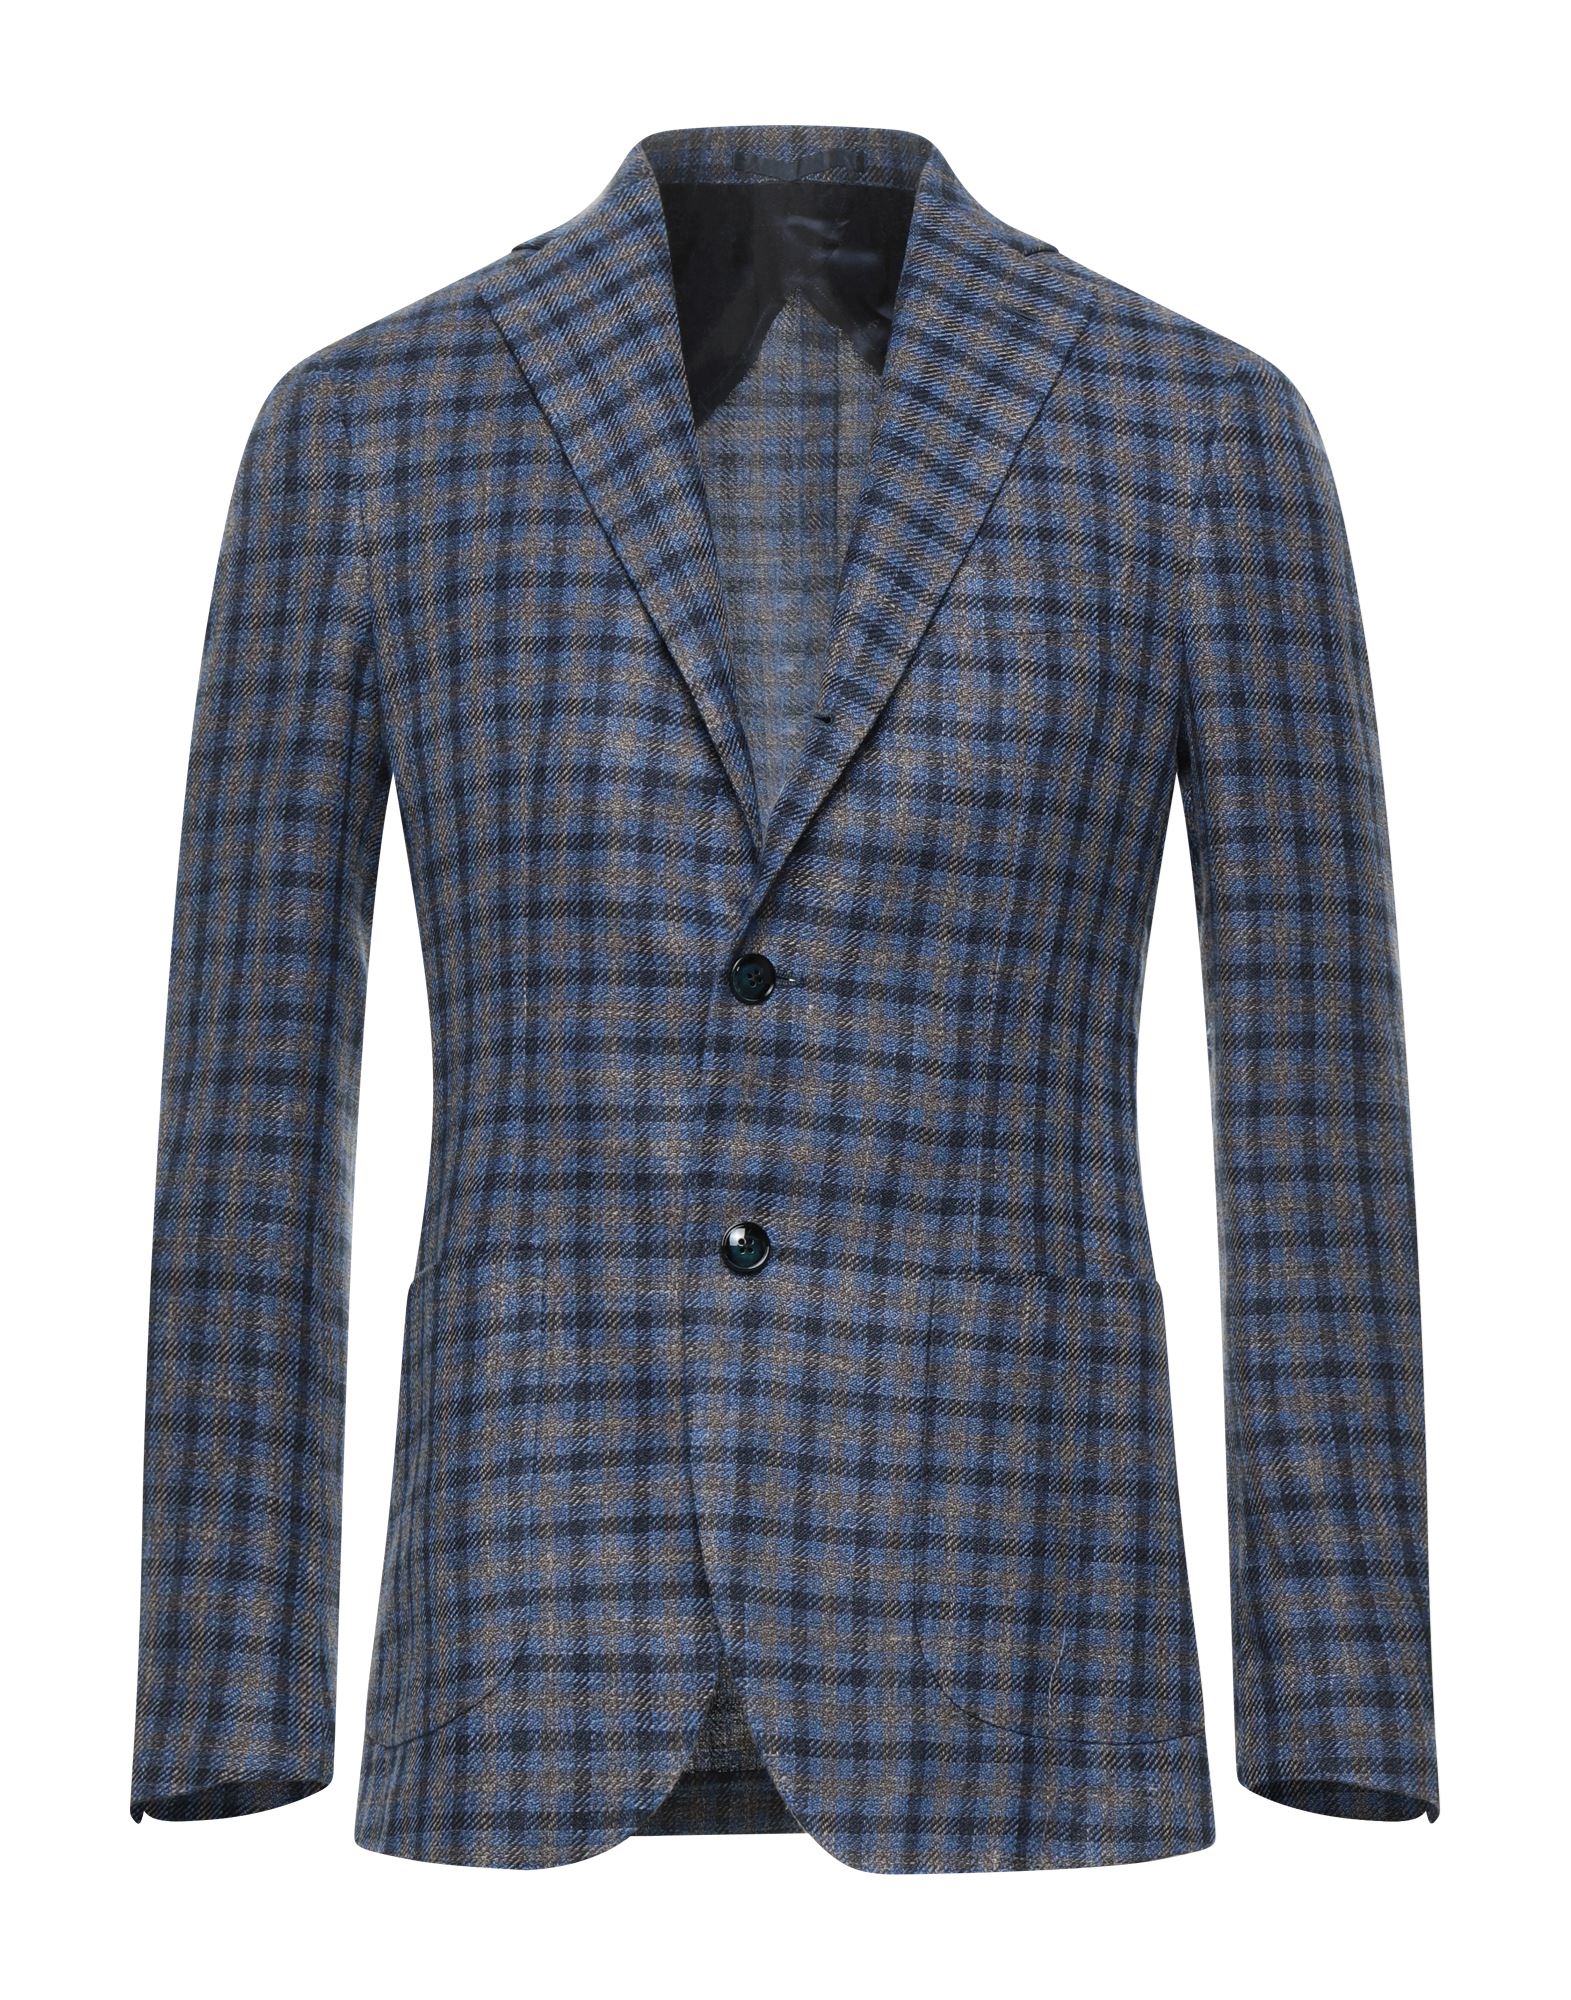 BARBA Napoli Suit jackets